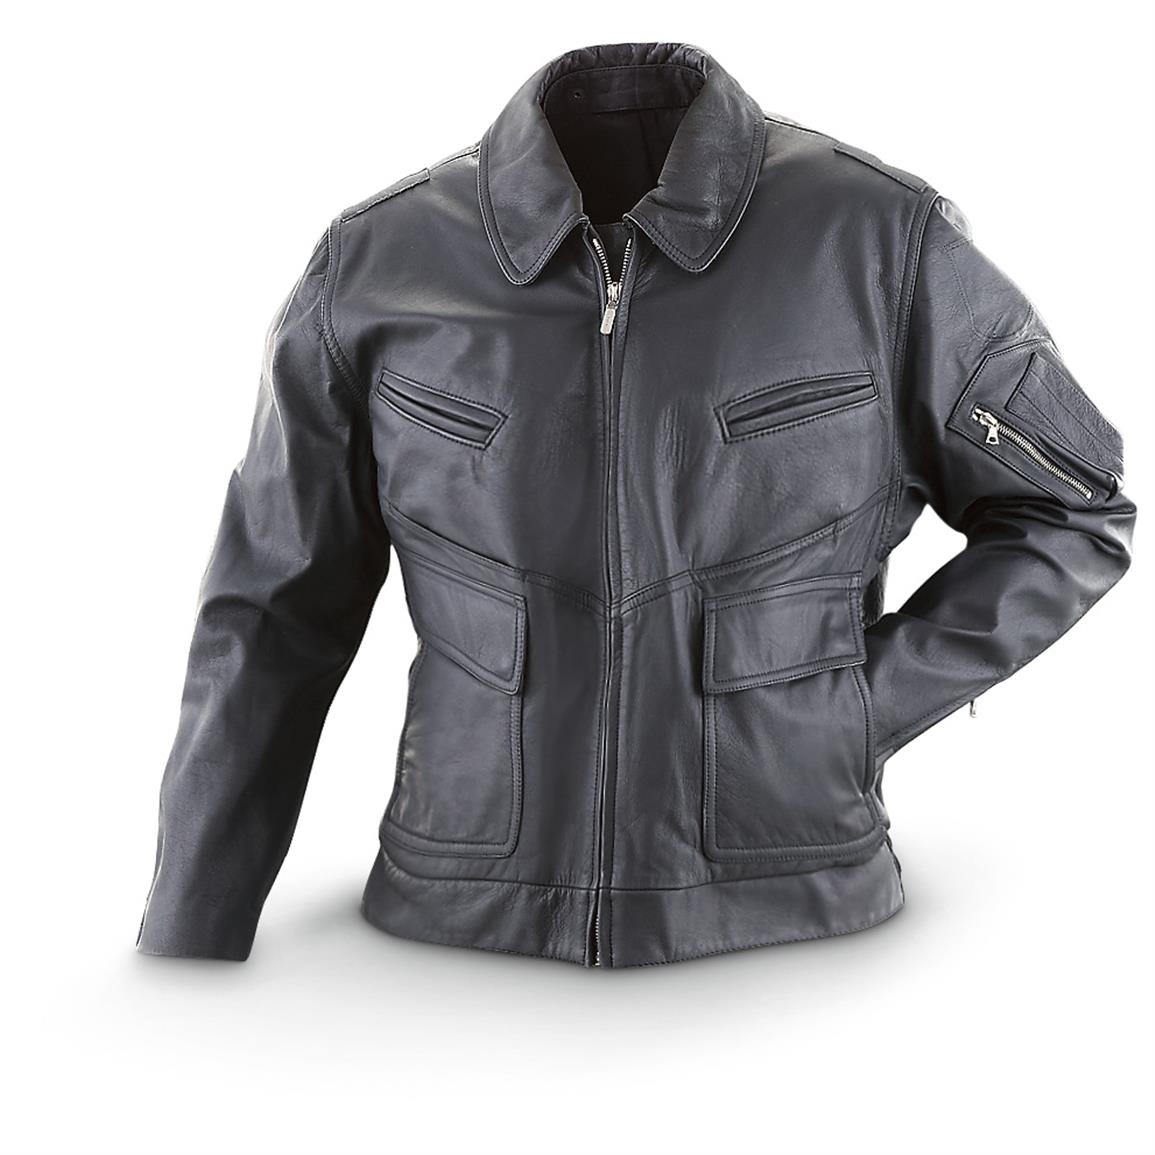 Police Leather Jacket 94